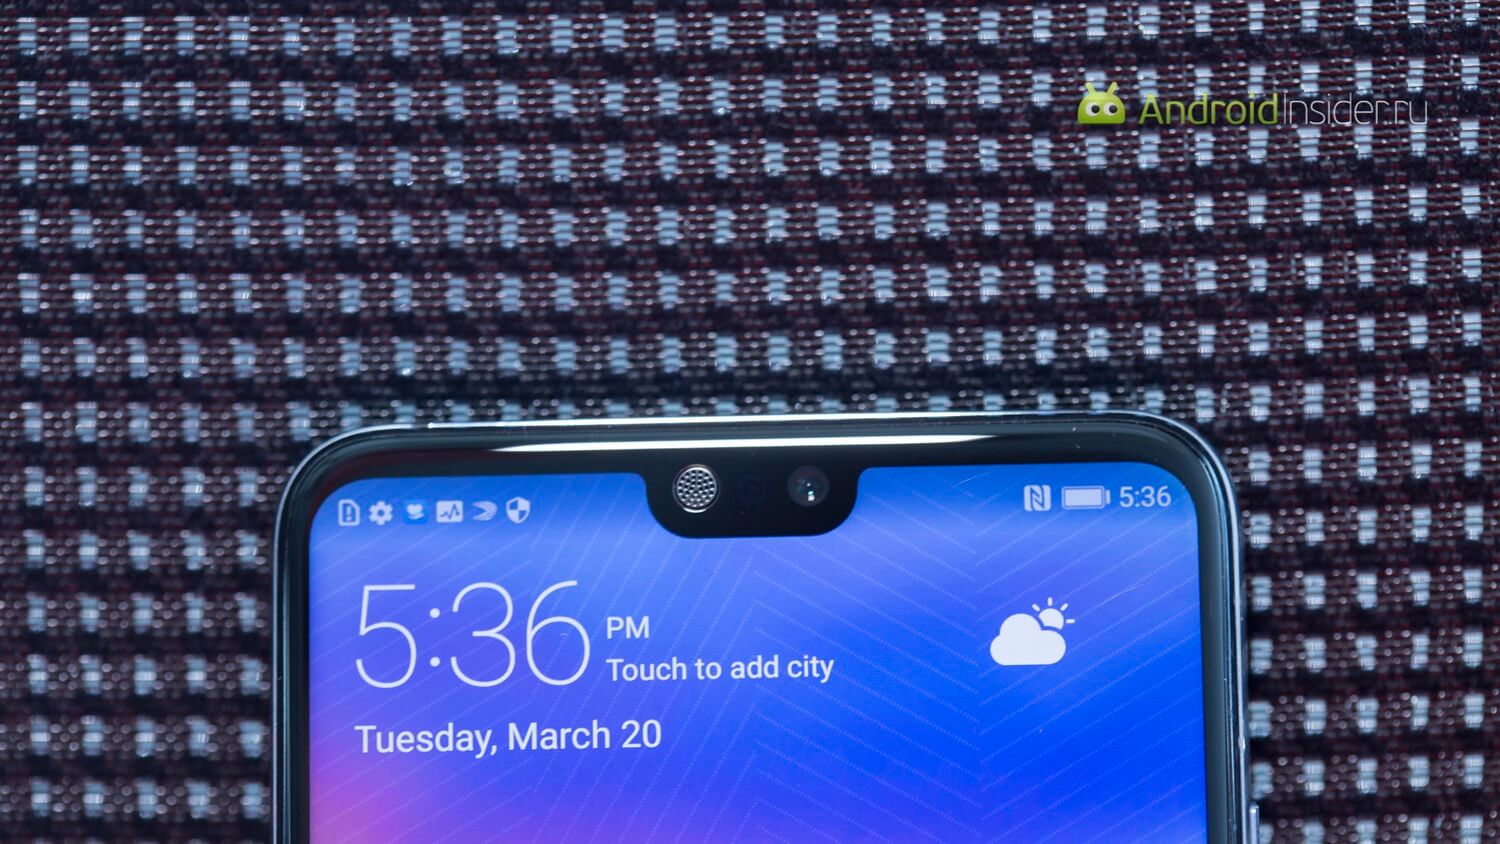 Новости Android #156: блокировка сервисов Google и новинки Huawei. Huawei представила свои новые смартфоны P20 и P20 Pro. Фото.